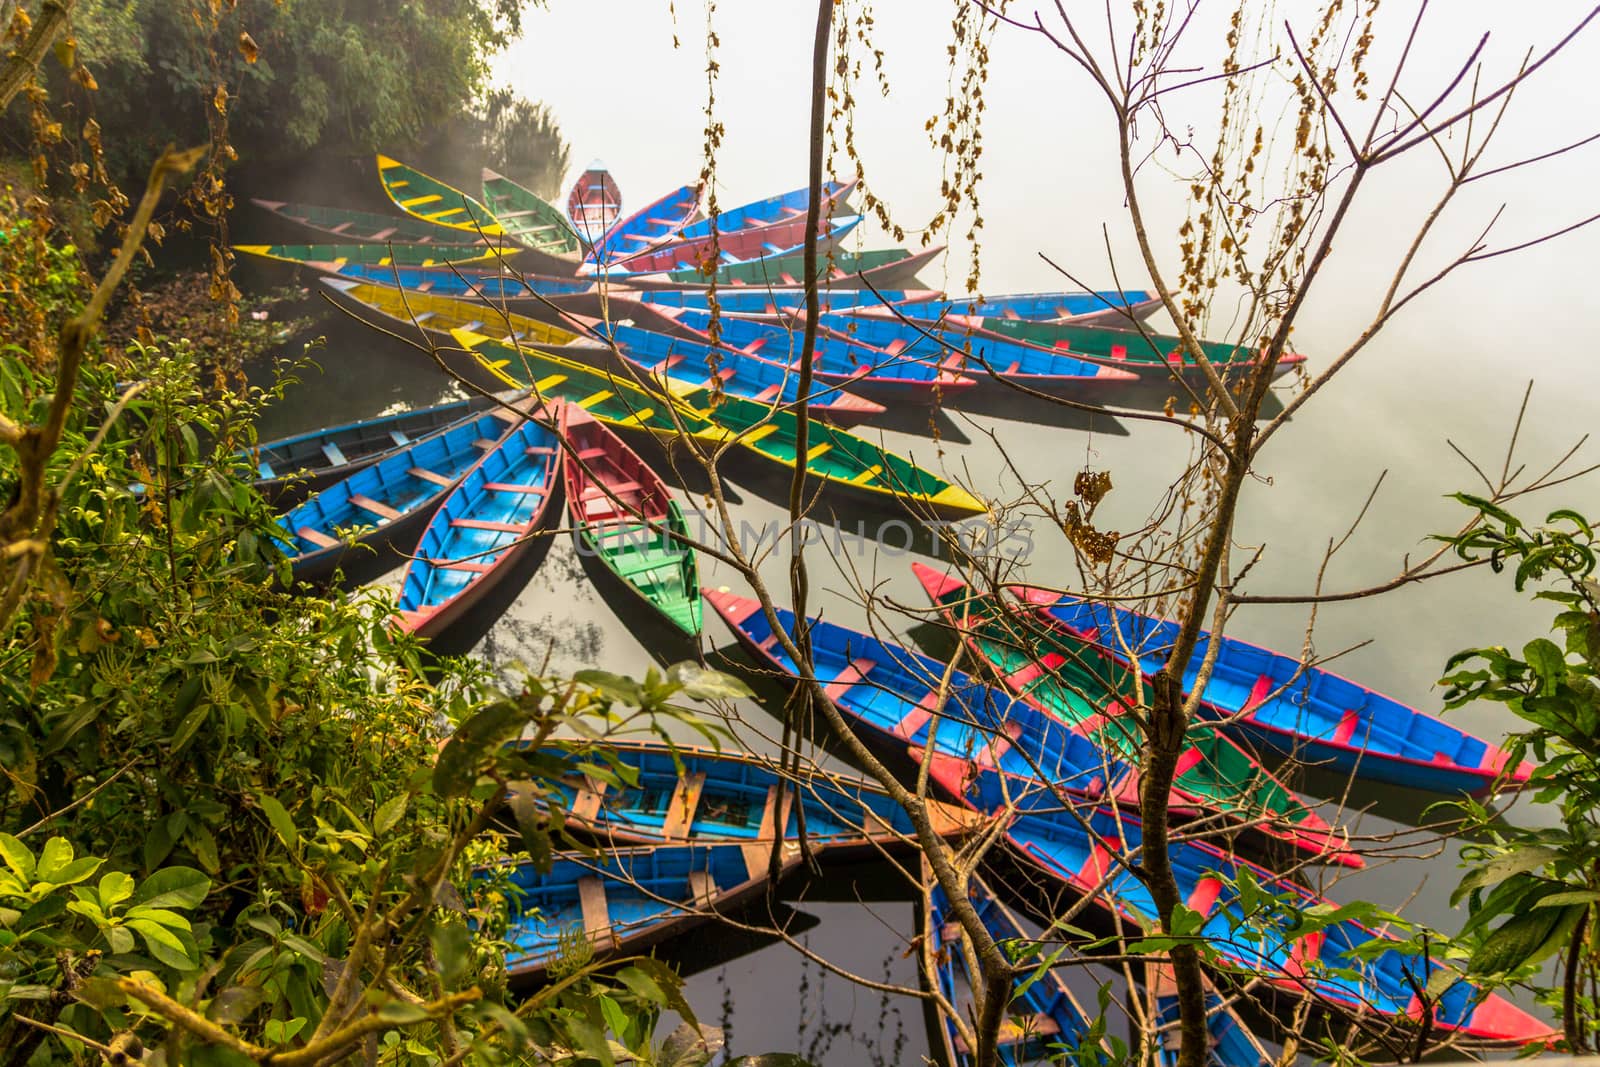 Colourful boats at shore of beautiful Phewa lake. Pokhara, Nepal. Concept of calm and serenity.